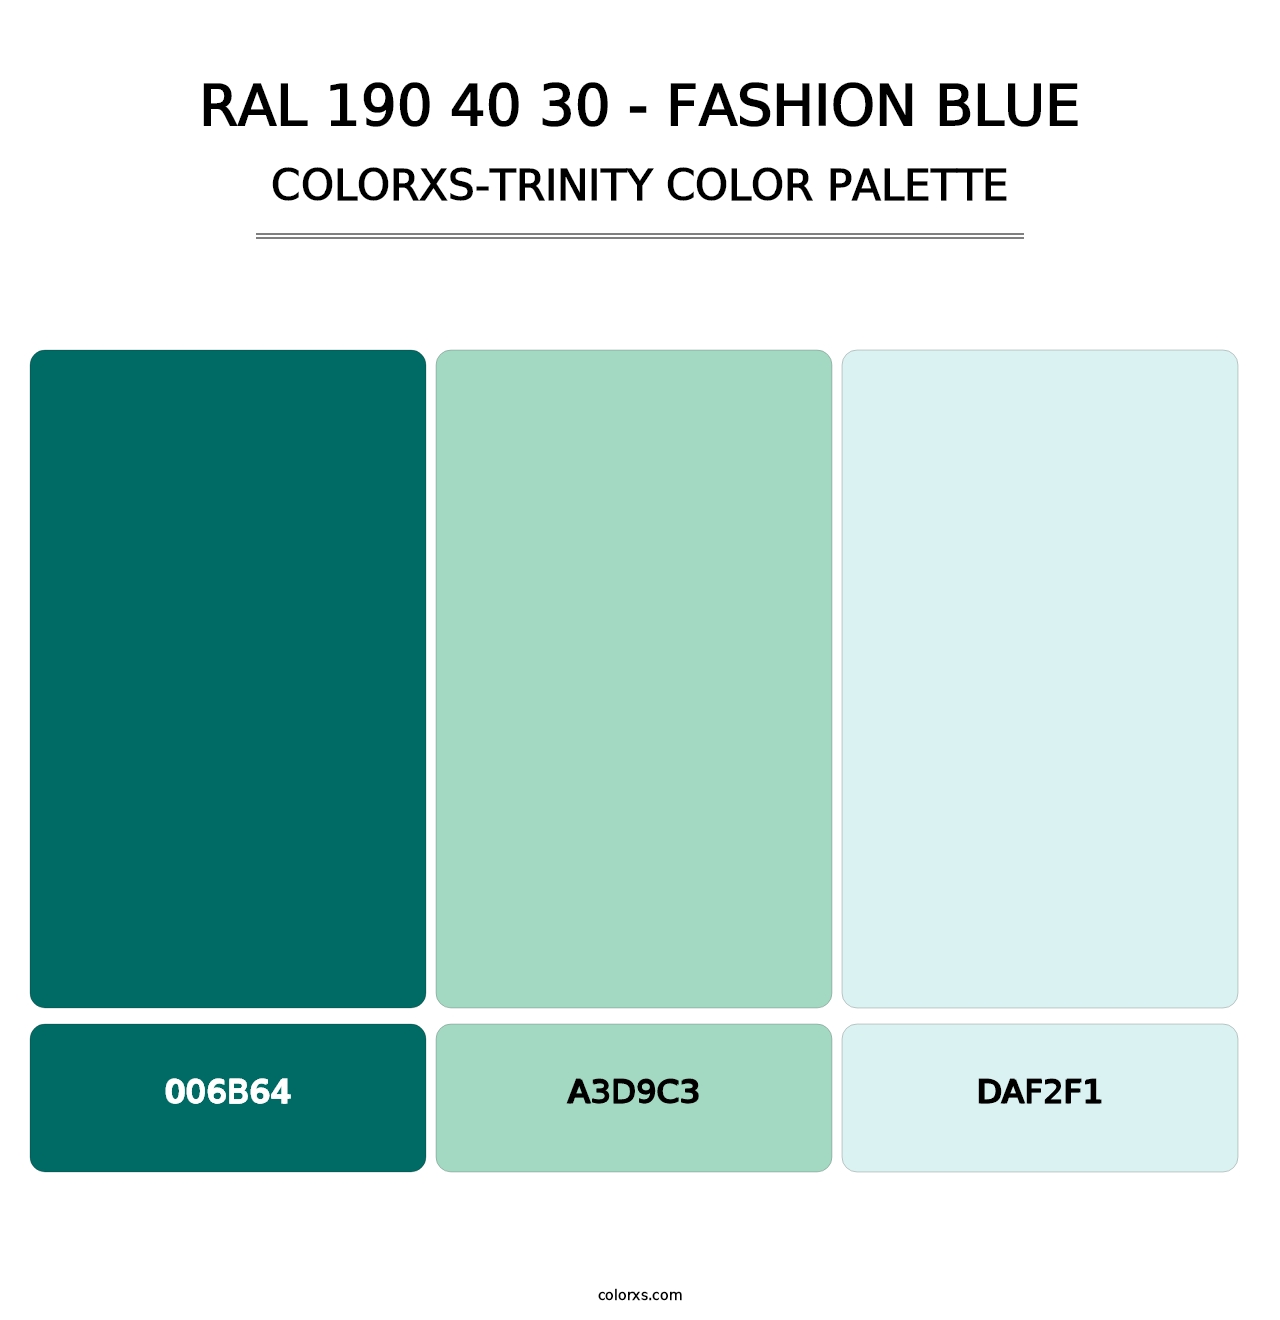 RAL 190 40 30 - Fashion Blue - Colorxs Trinity Palette